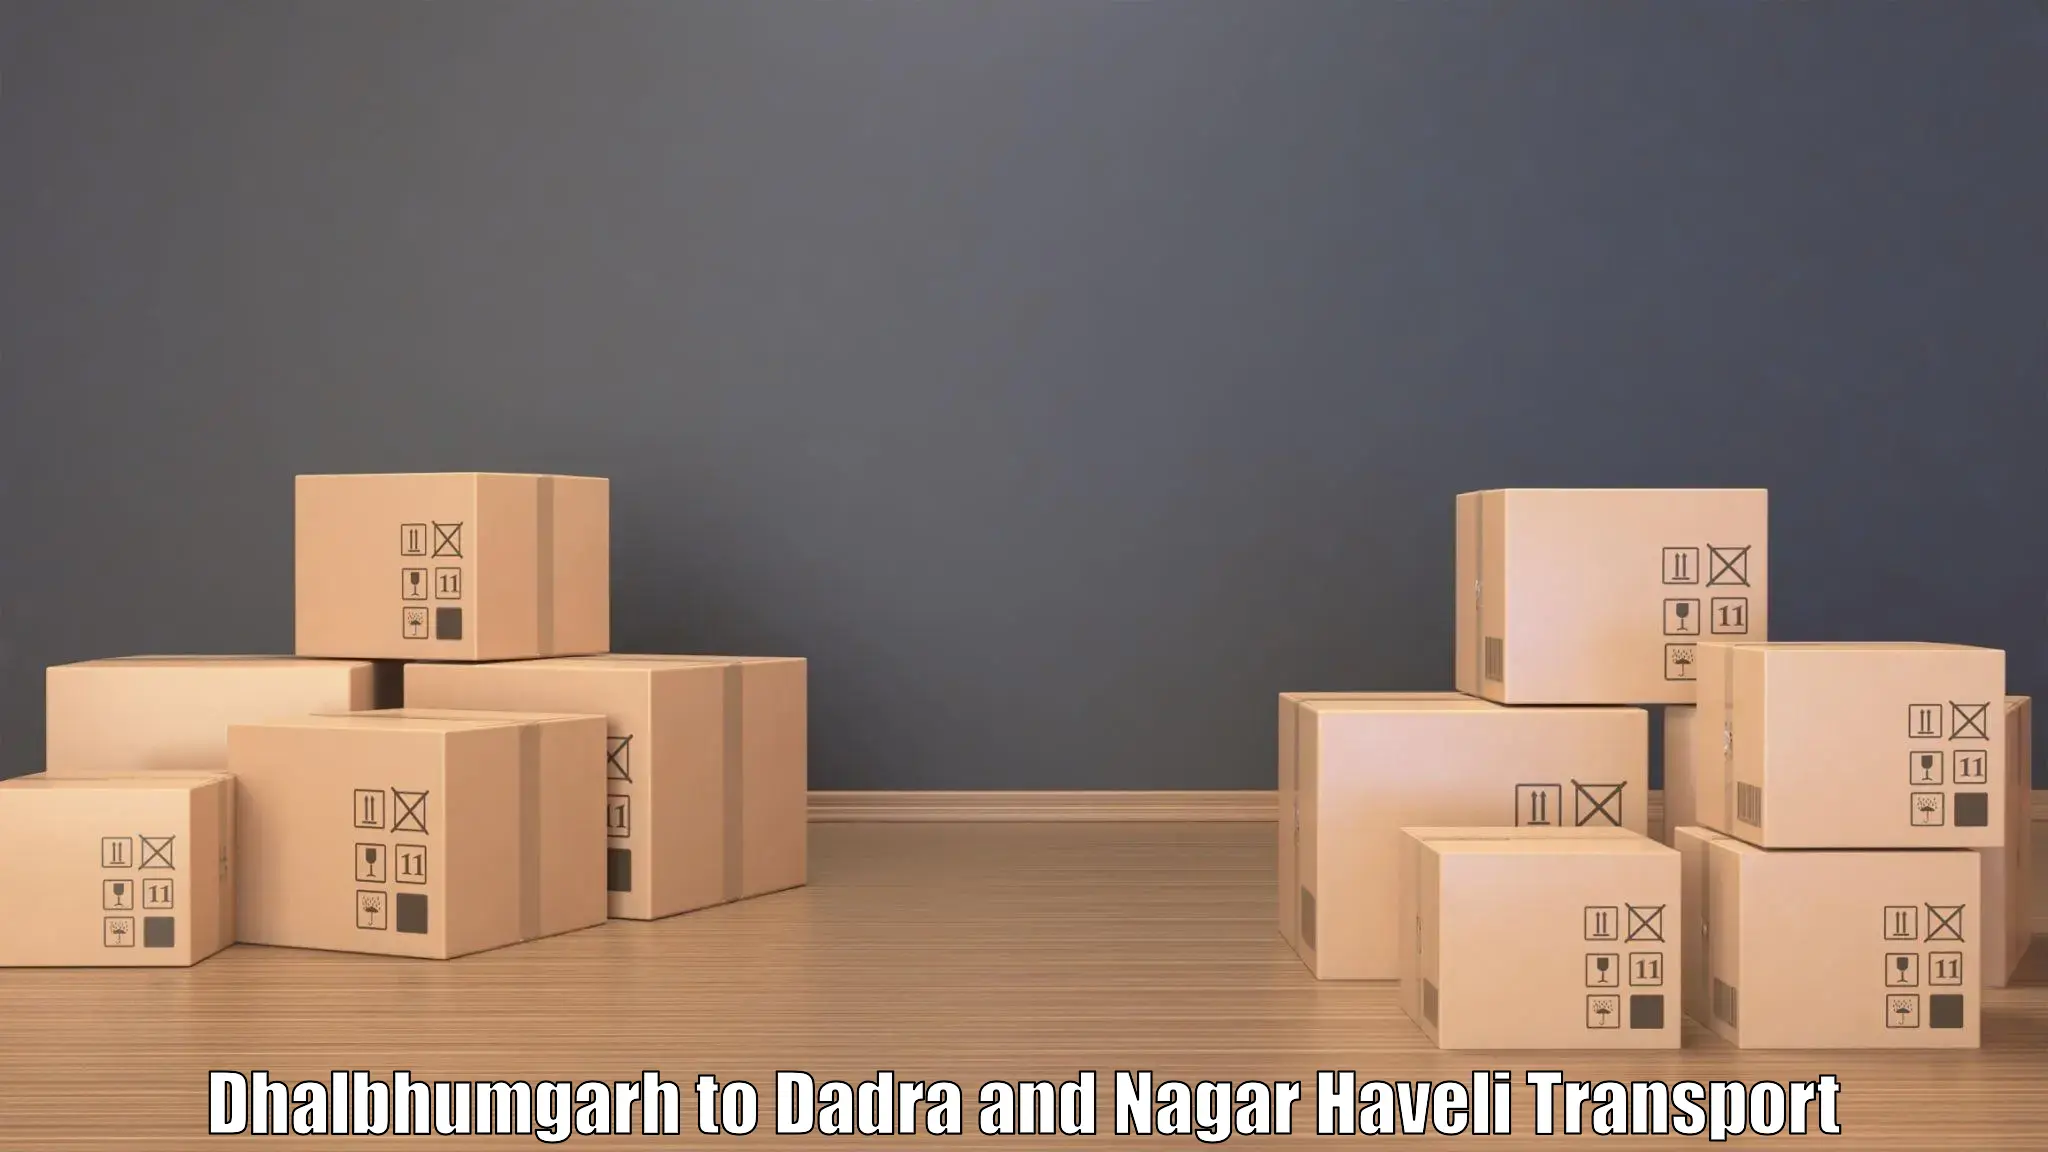 Container transport service Dhalbhumgarh to Dadra and Nagar Haveli